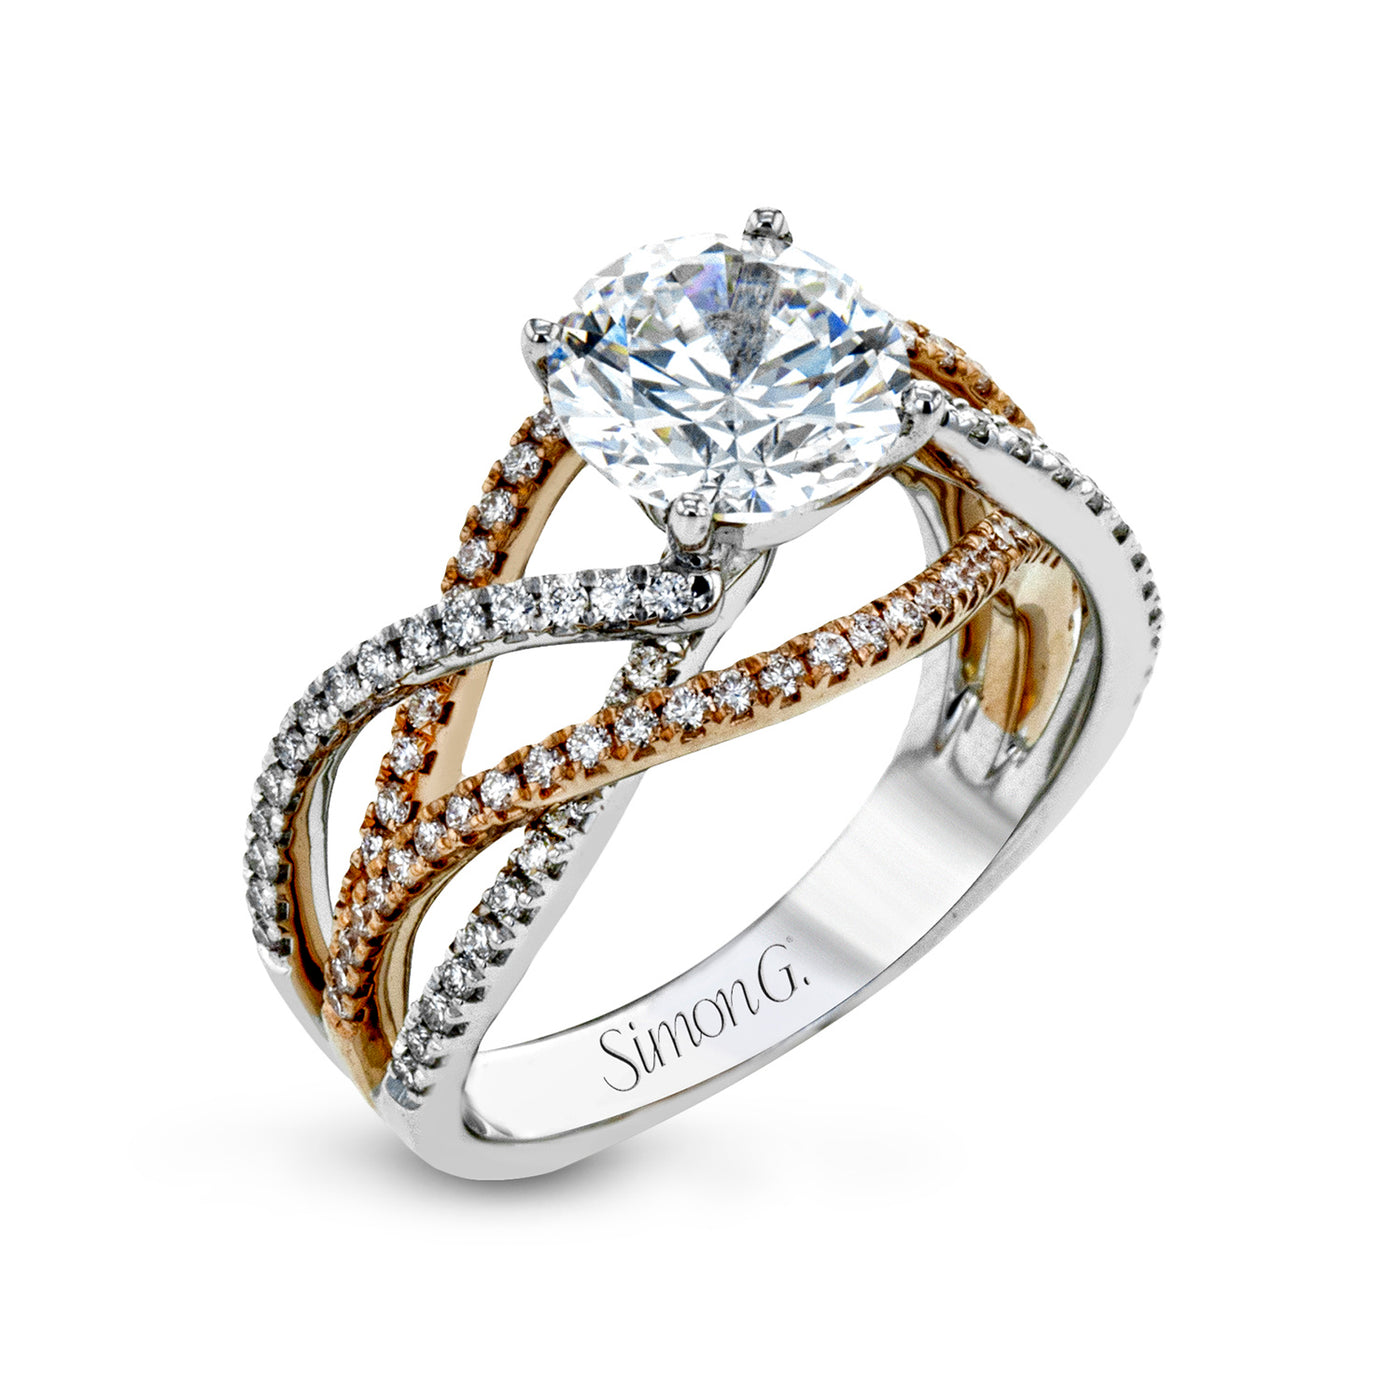 Simon G 18k White & Rose Gold Round Contemporary Diamond Semi-Mount Engagement Ring – LR2125